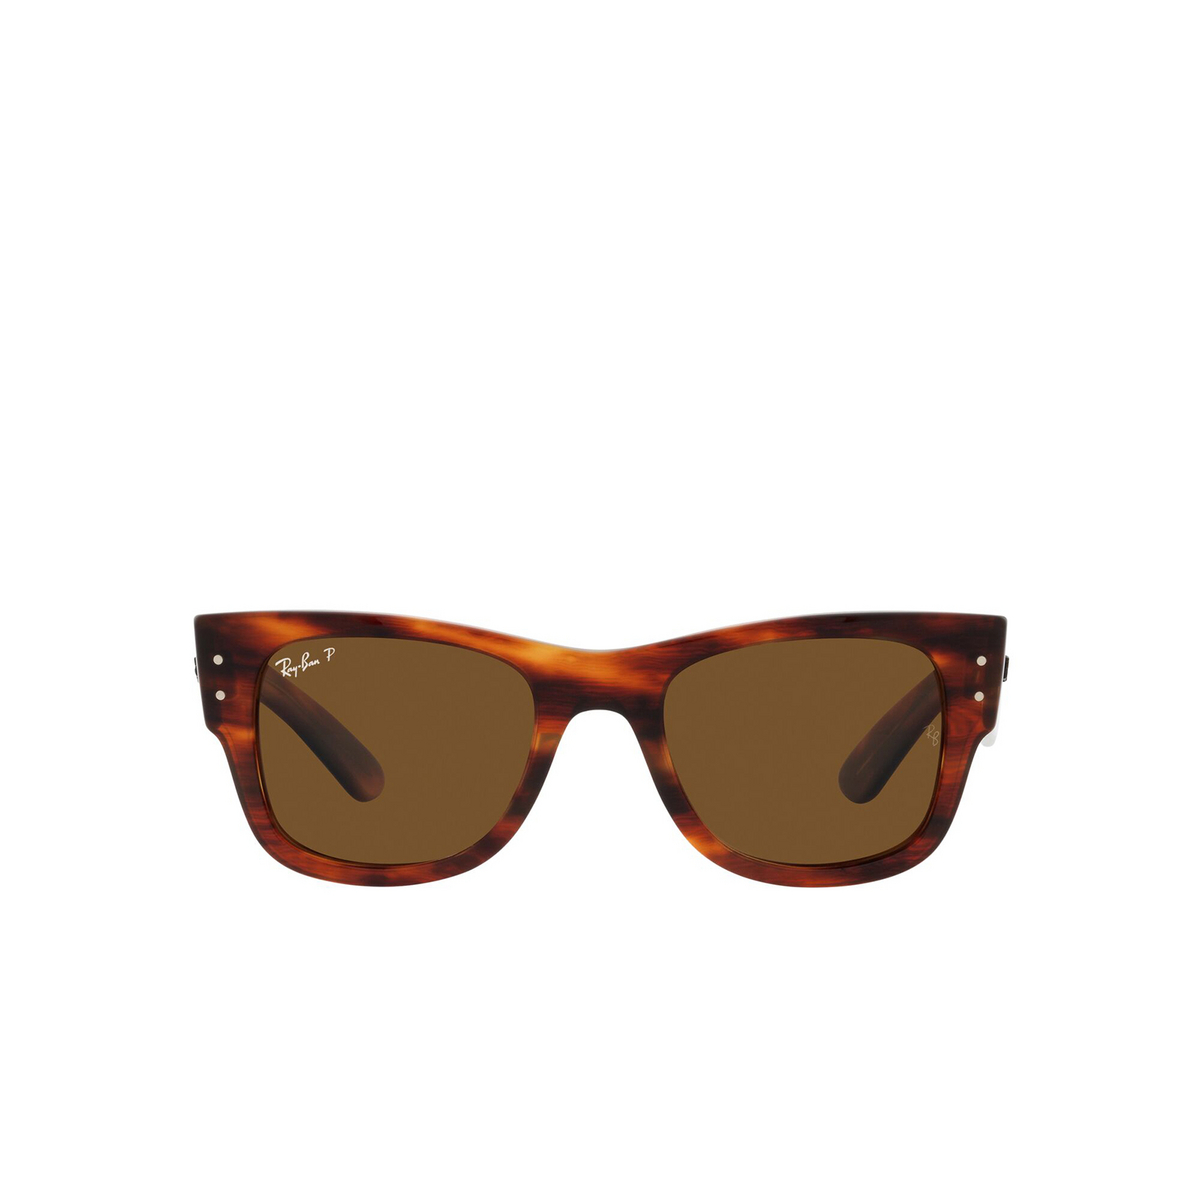 Ray-Ban MEGA WAYFARER Sunglasses 954/57 Striped Havana - front view